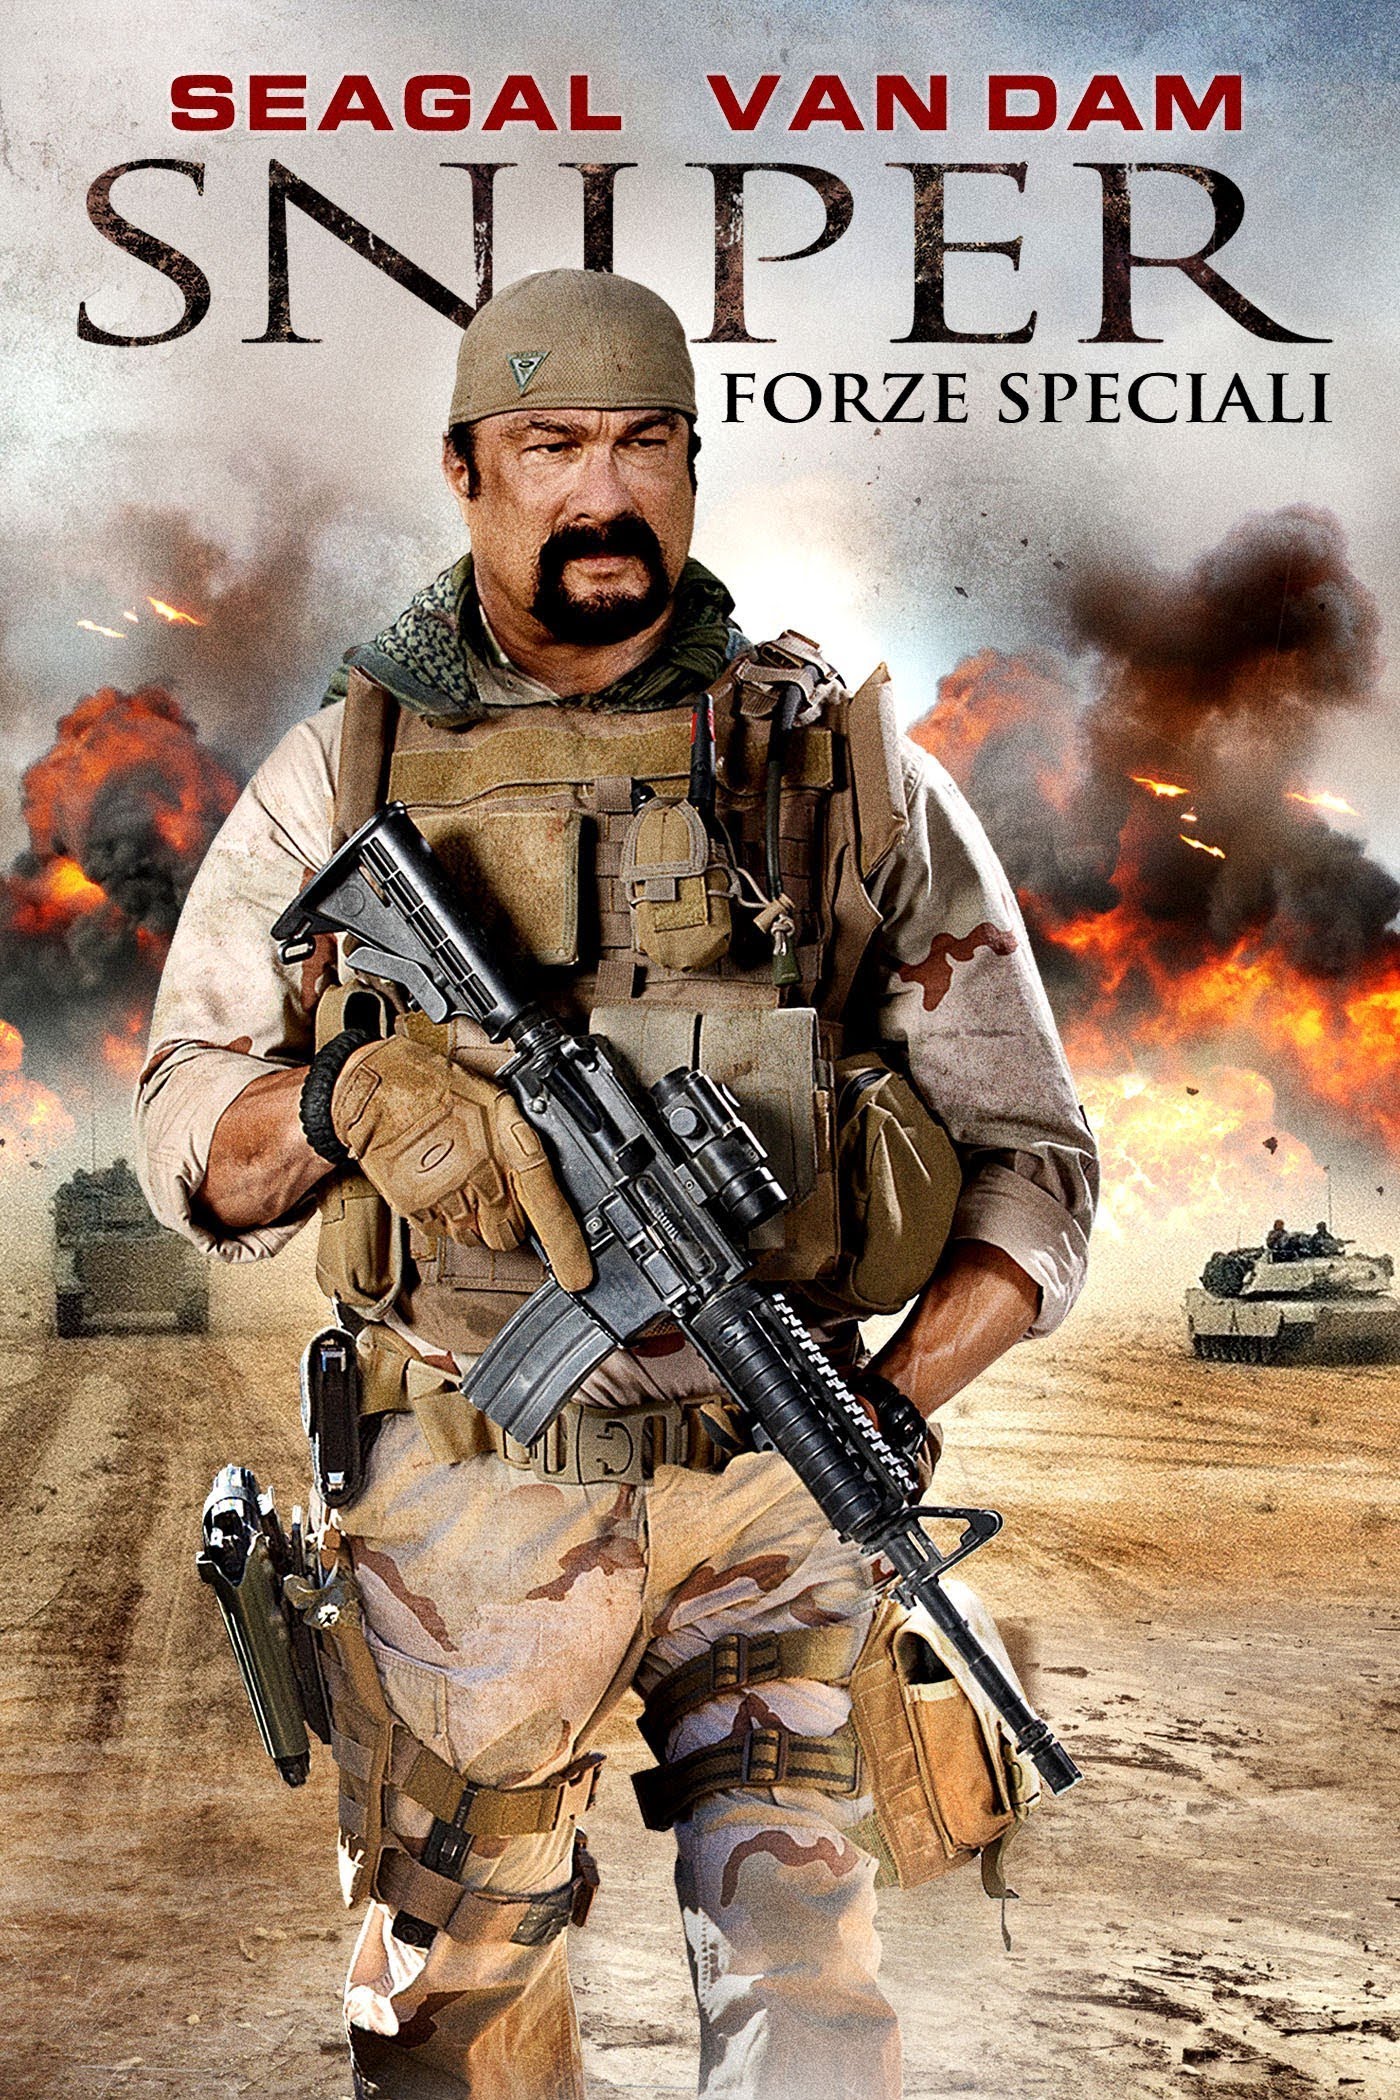 Sniper – Forze speciali [HD] (2016)